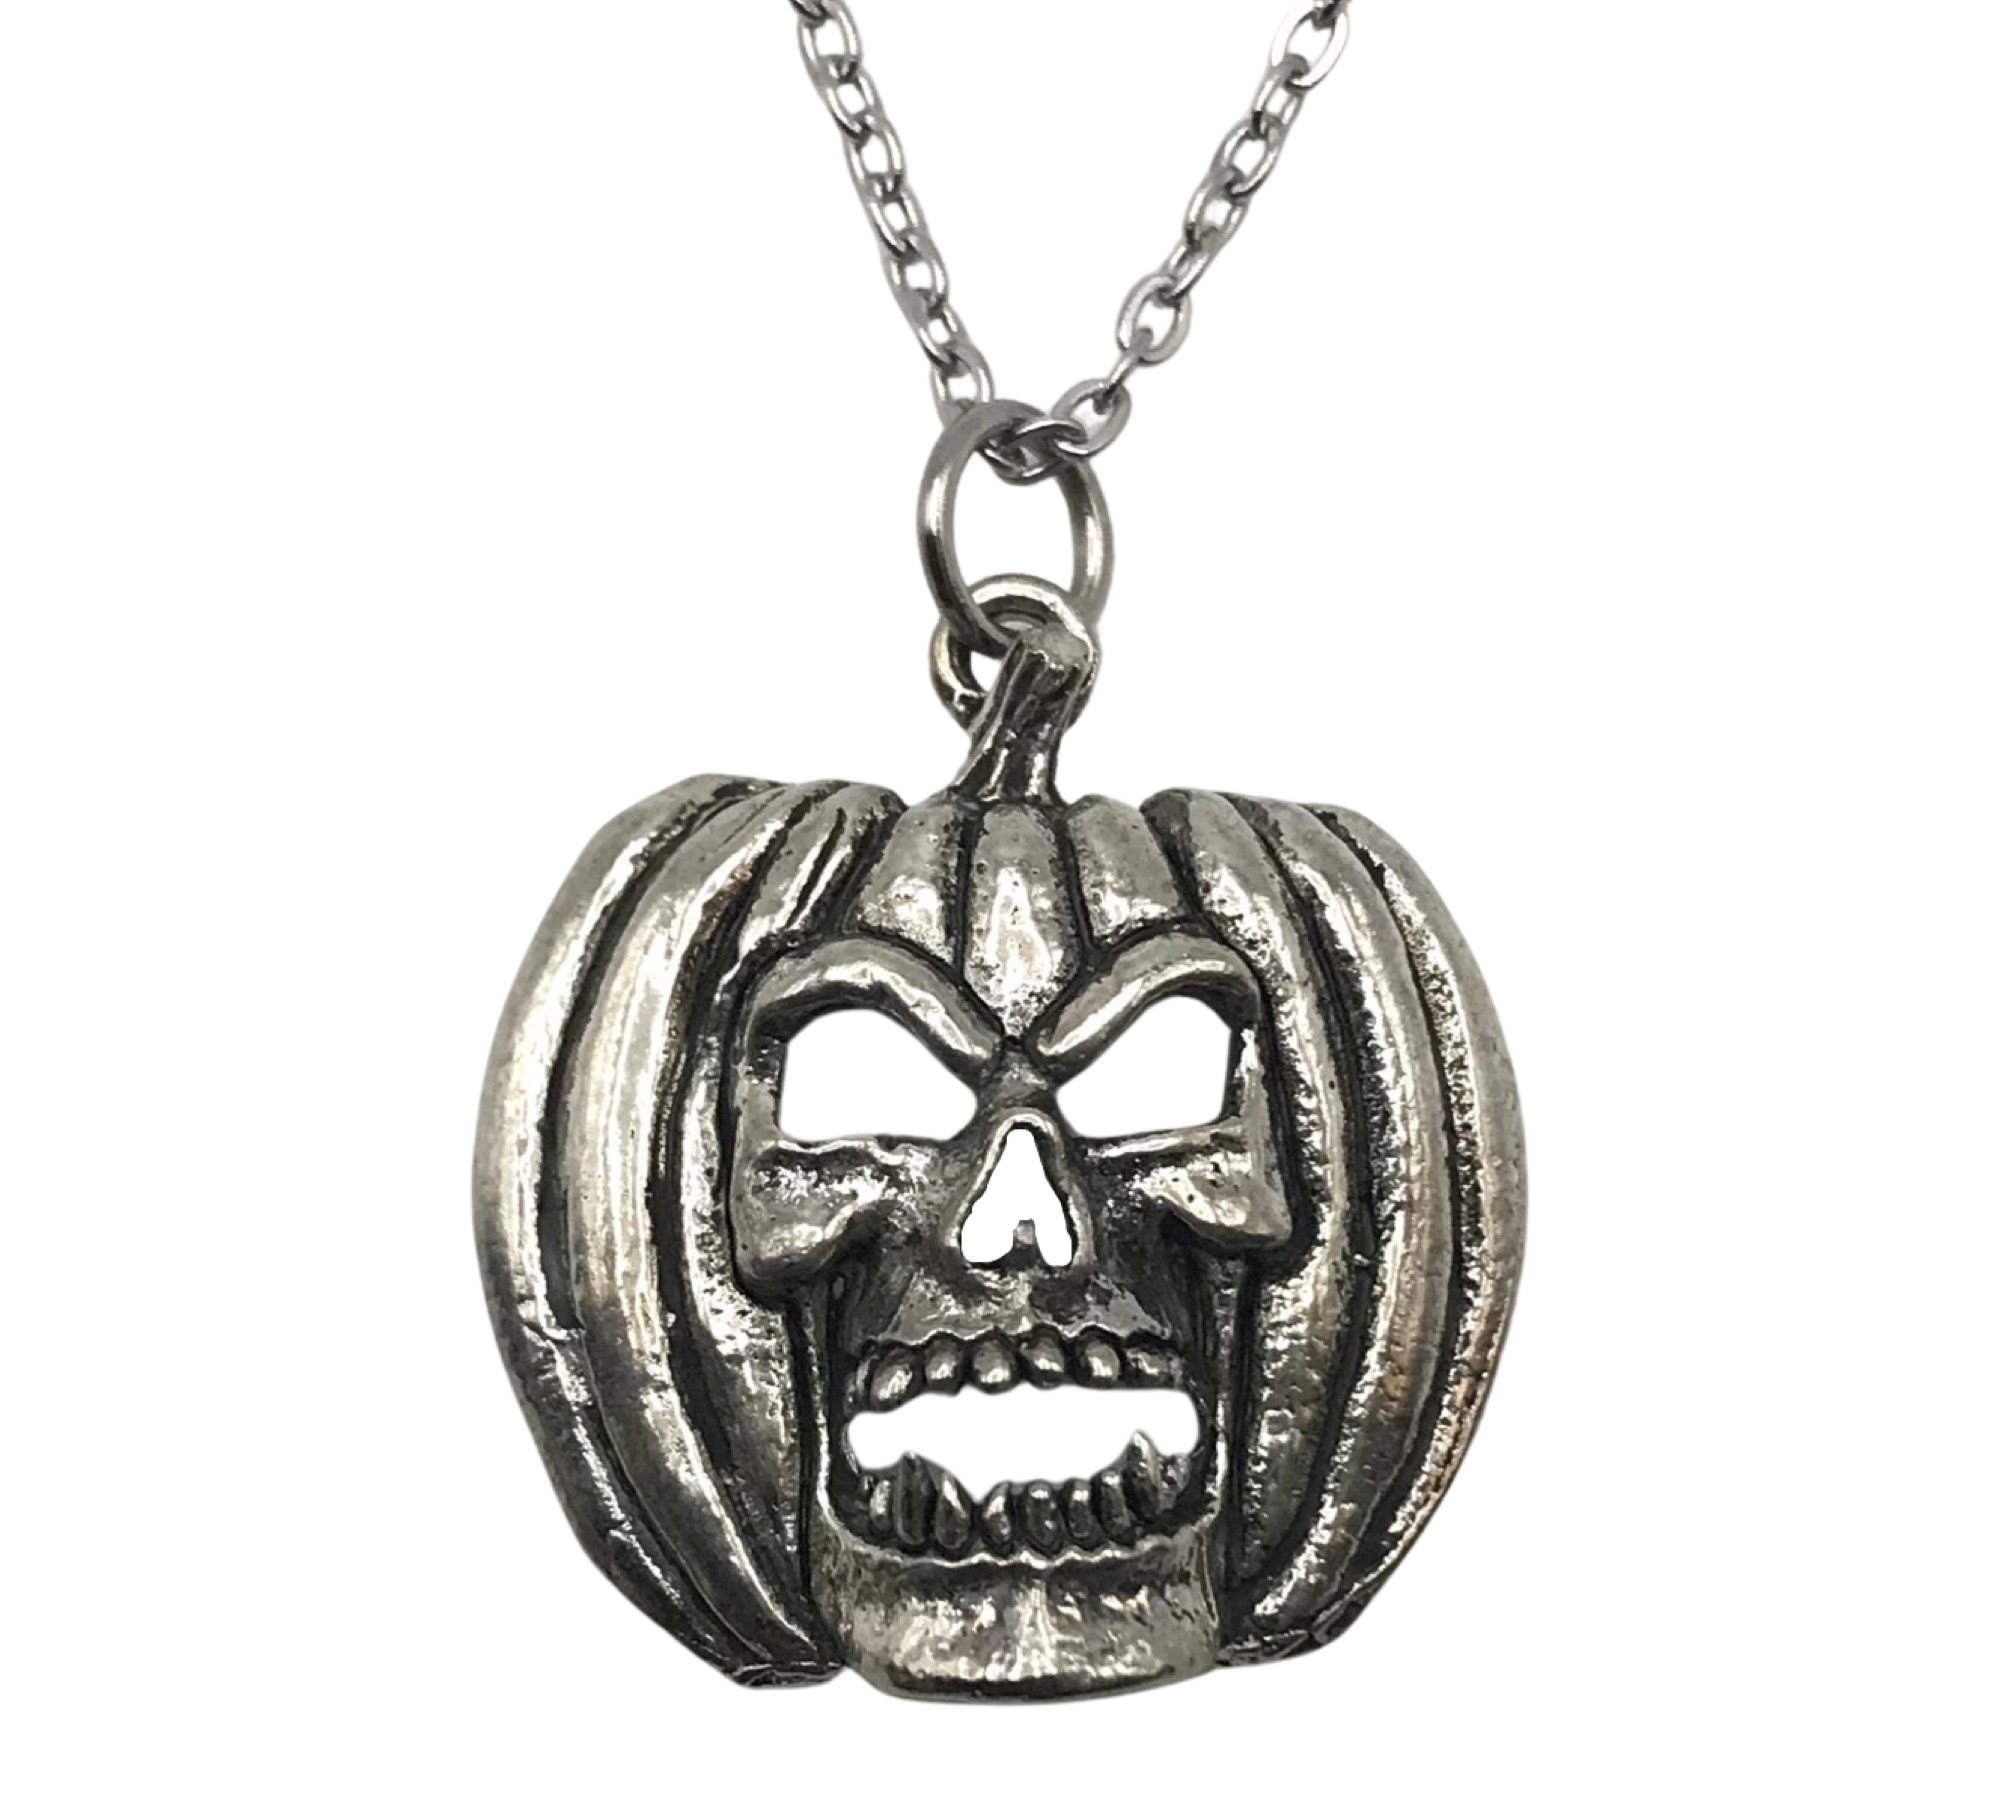 NOS G&S 1980s evil pumpkin novelty pendant necklace